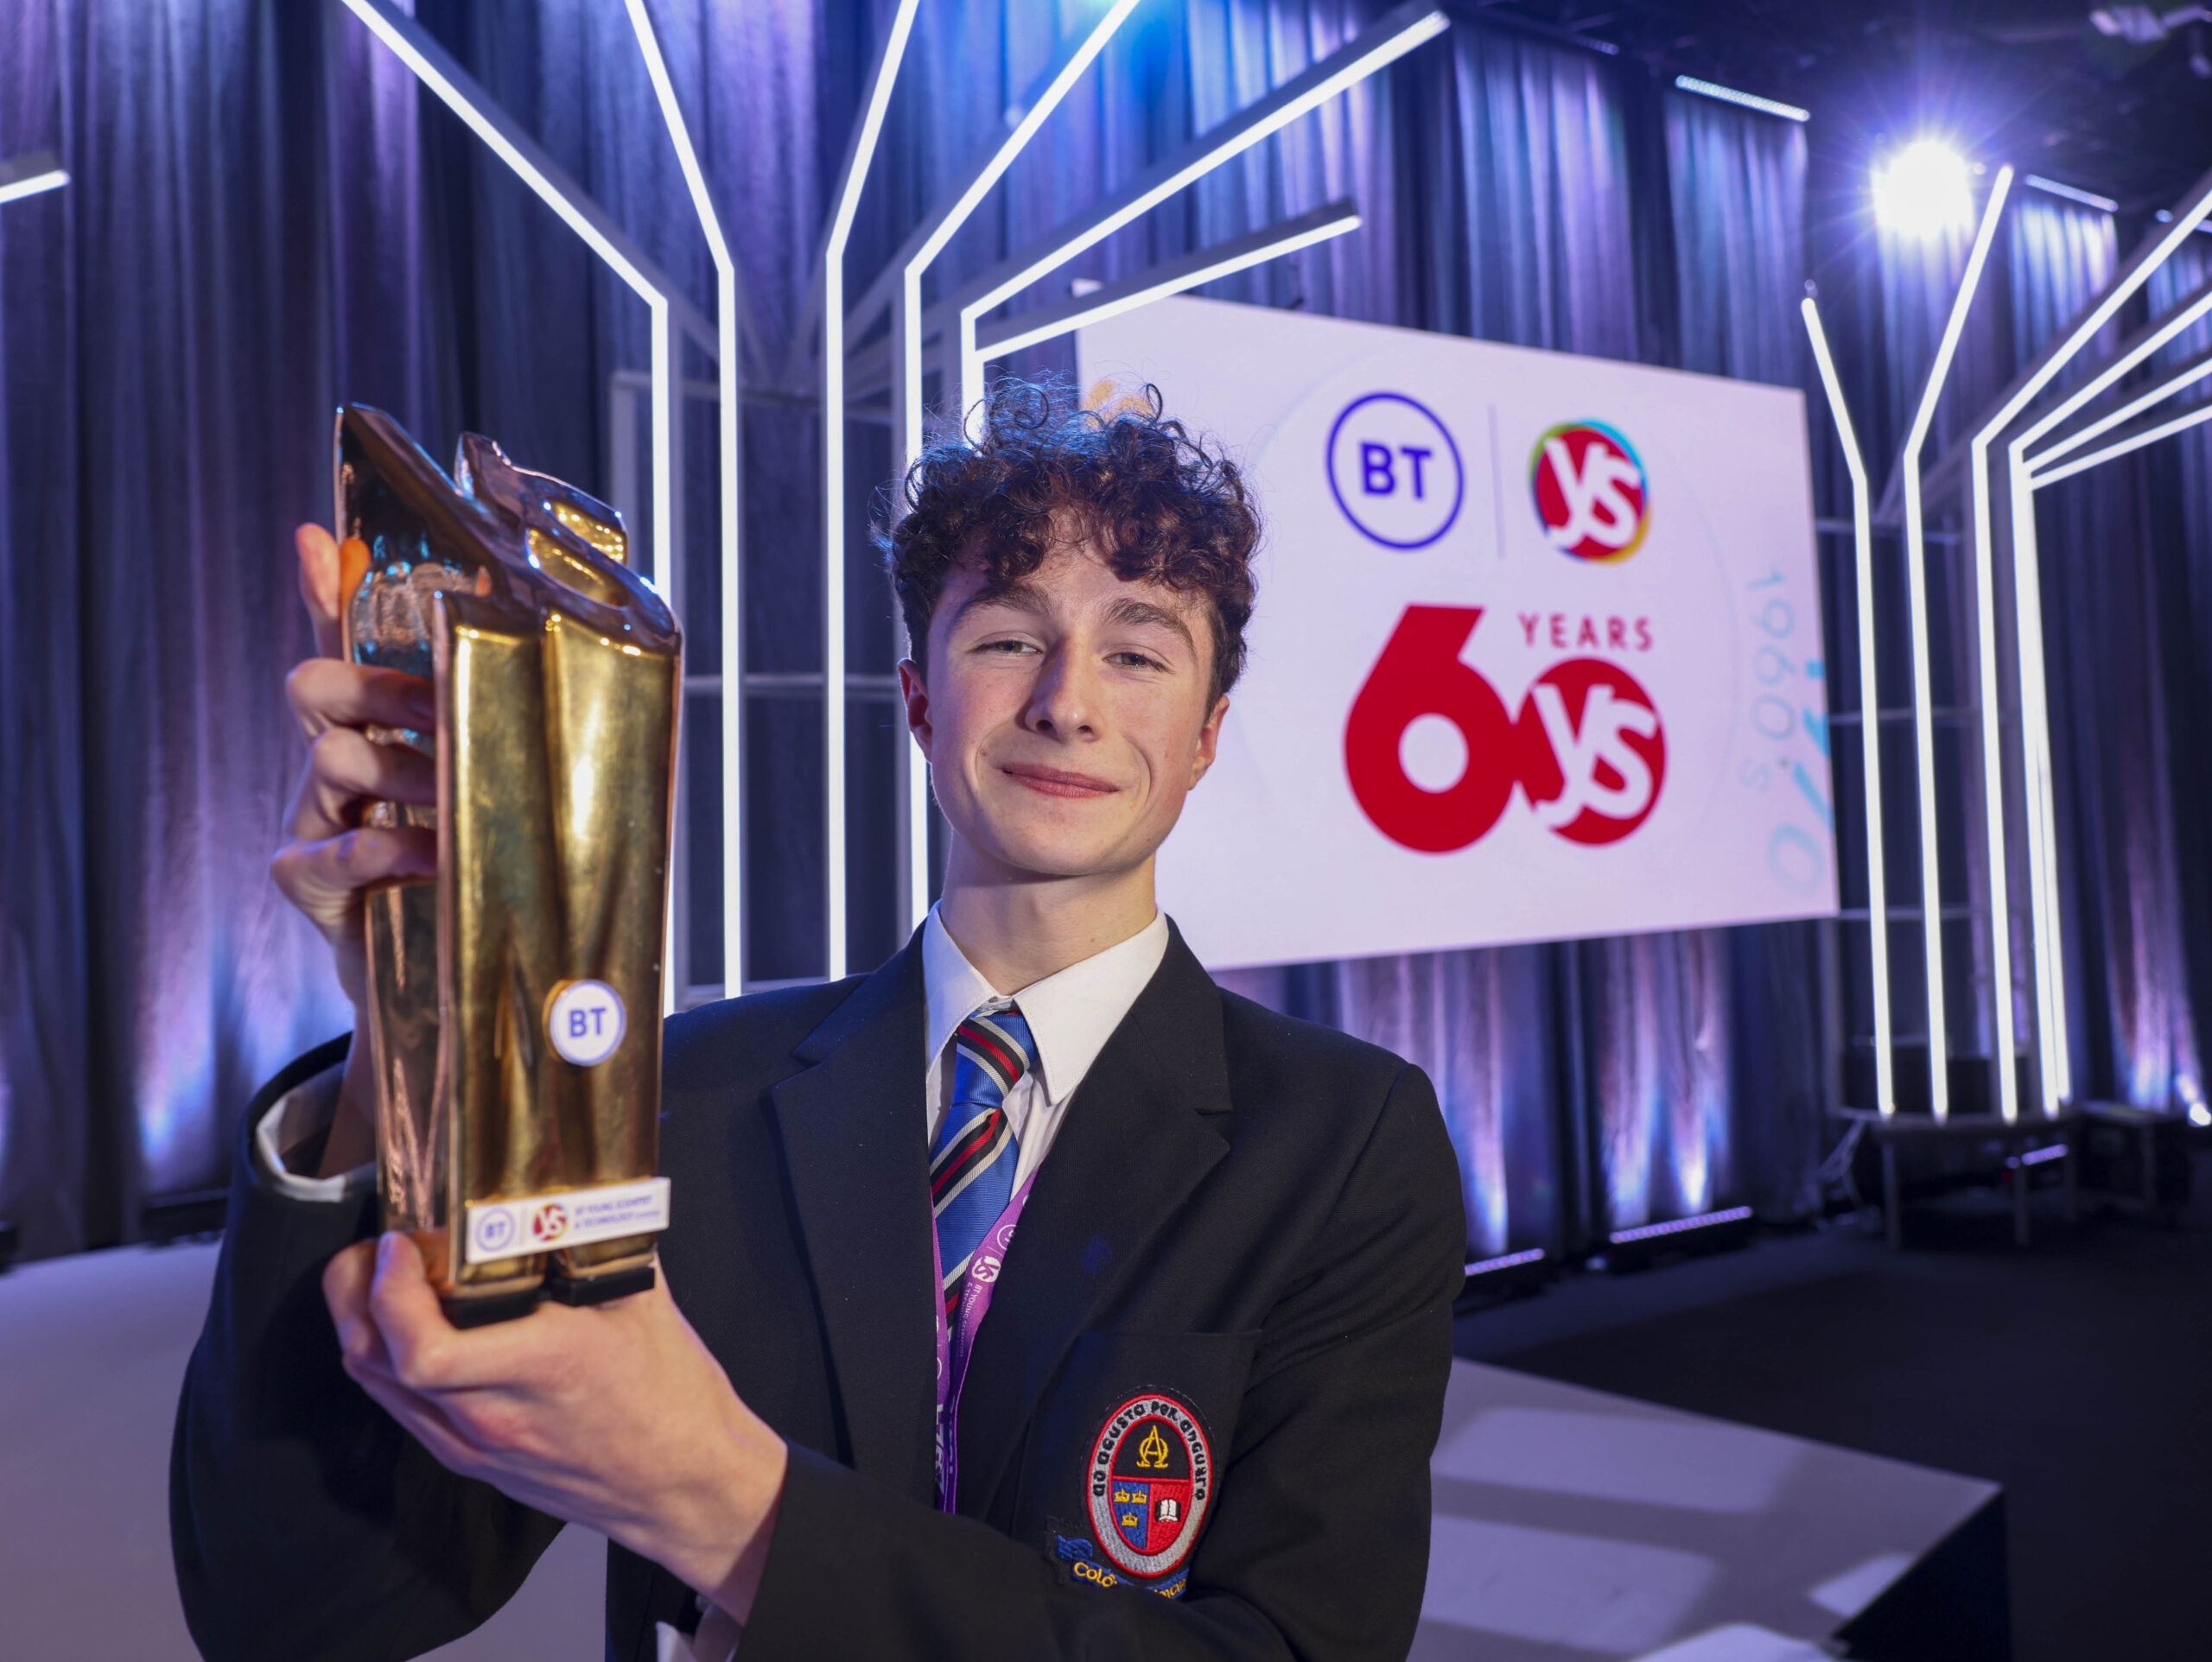 Limerick’s Seán O’Sullivan wins 60th BT Young Scientist & Technology Exhibition